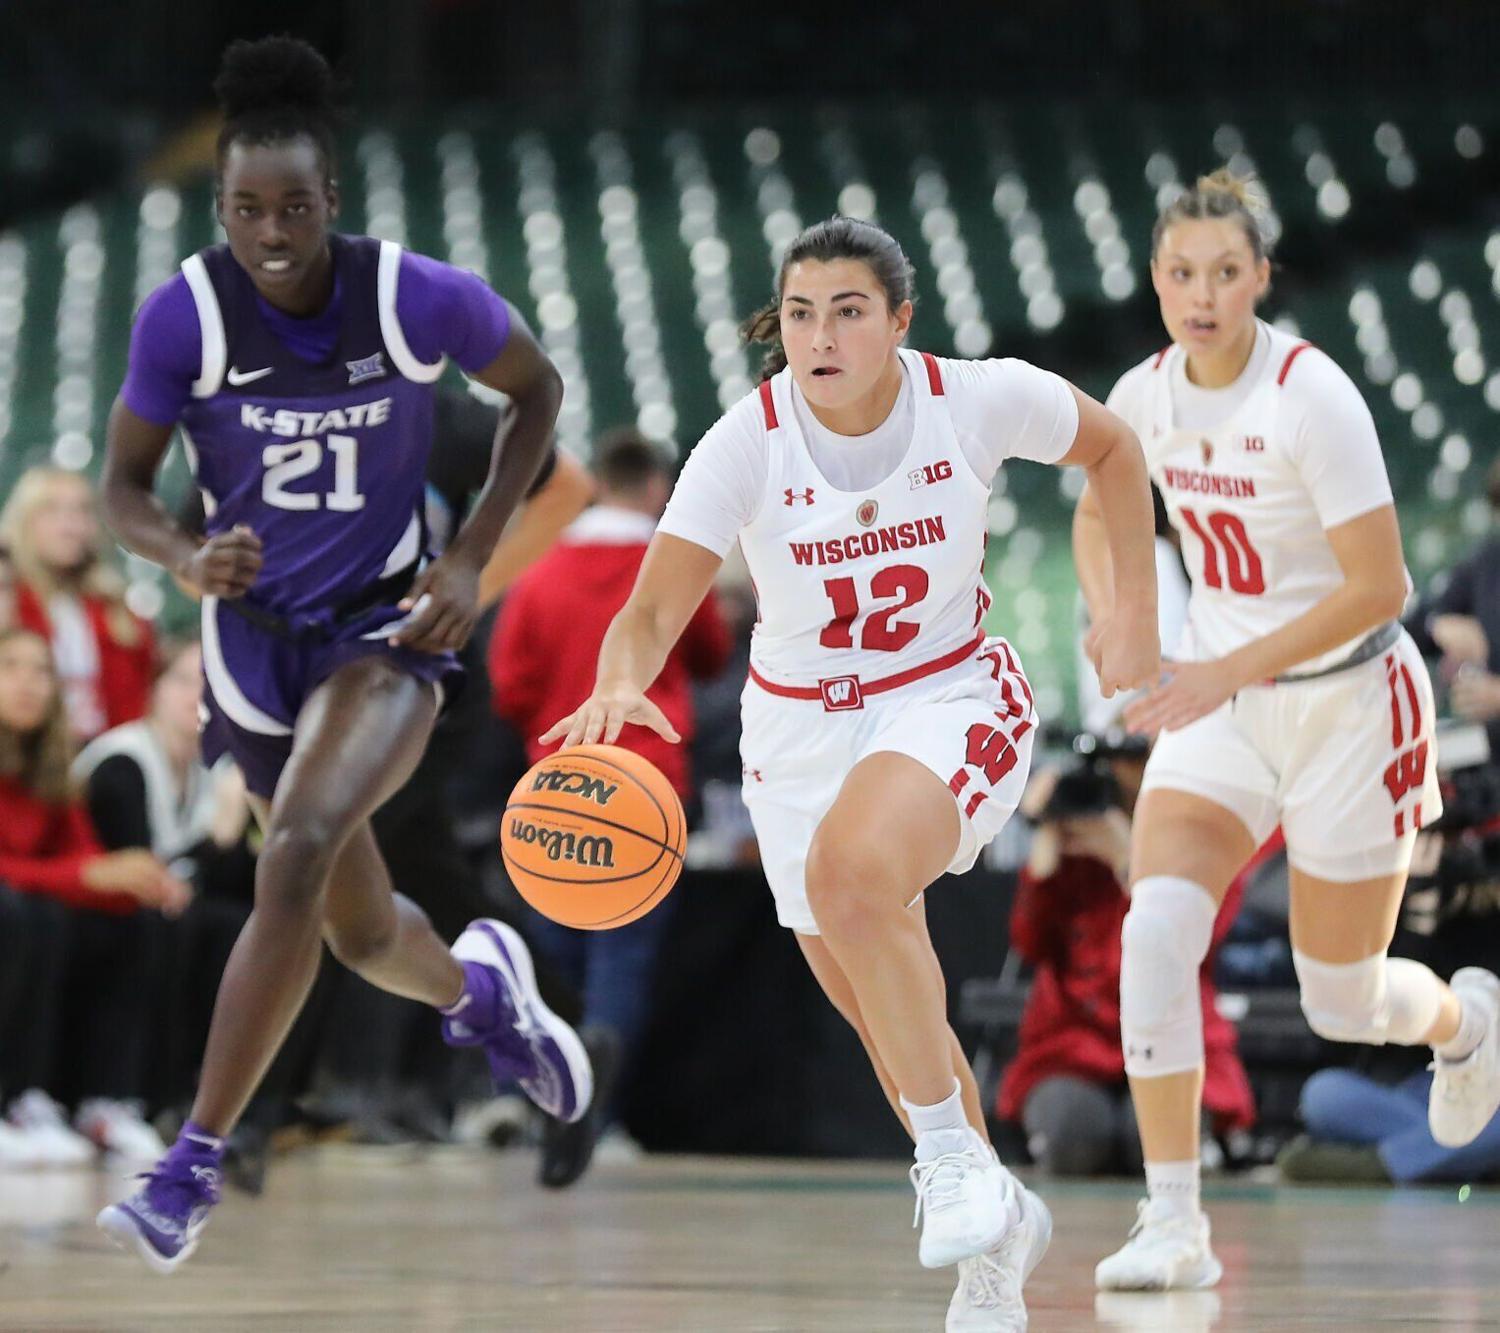 Instant analysis: Maty Wilke provides Wisconsin women's basketball a lift